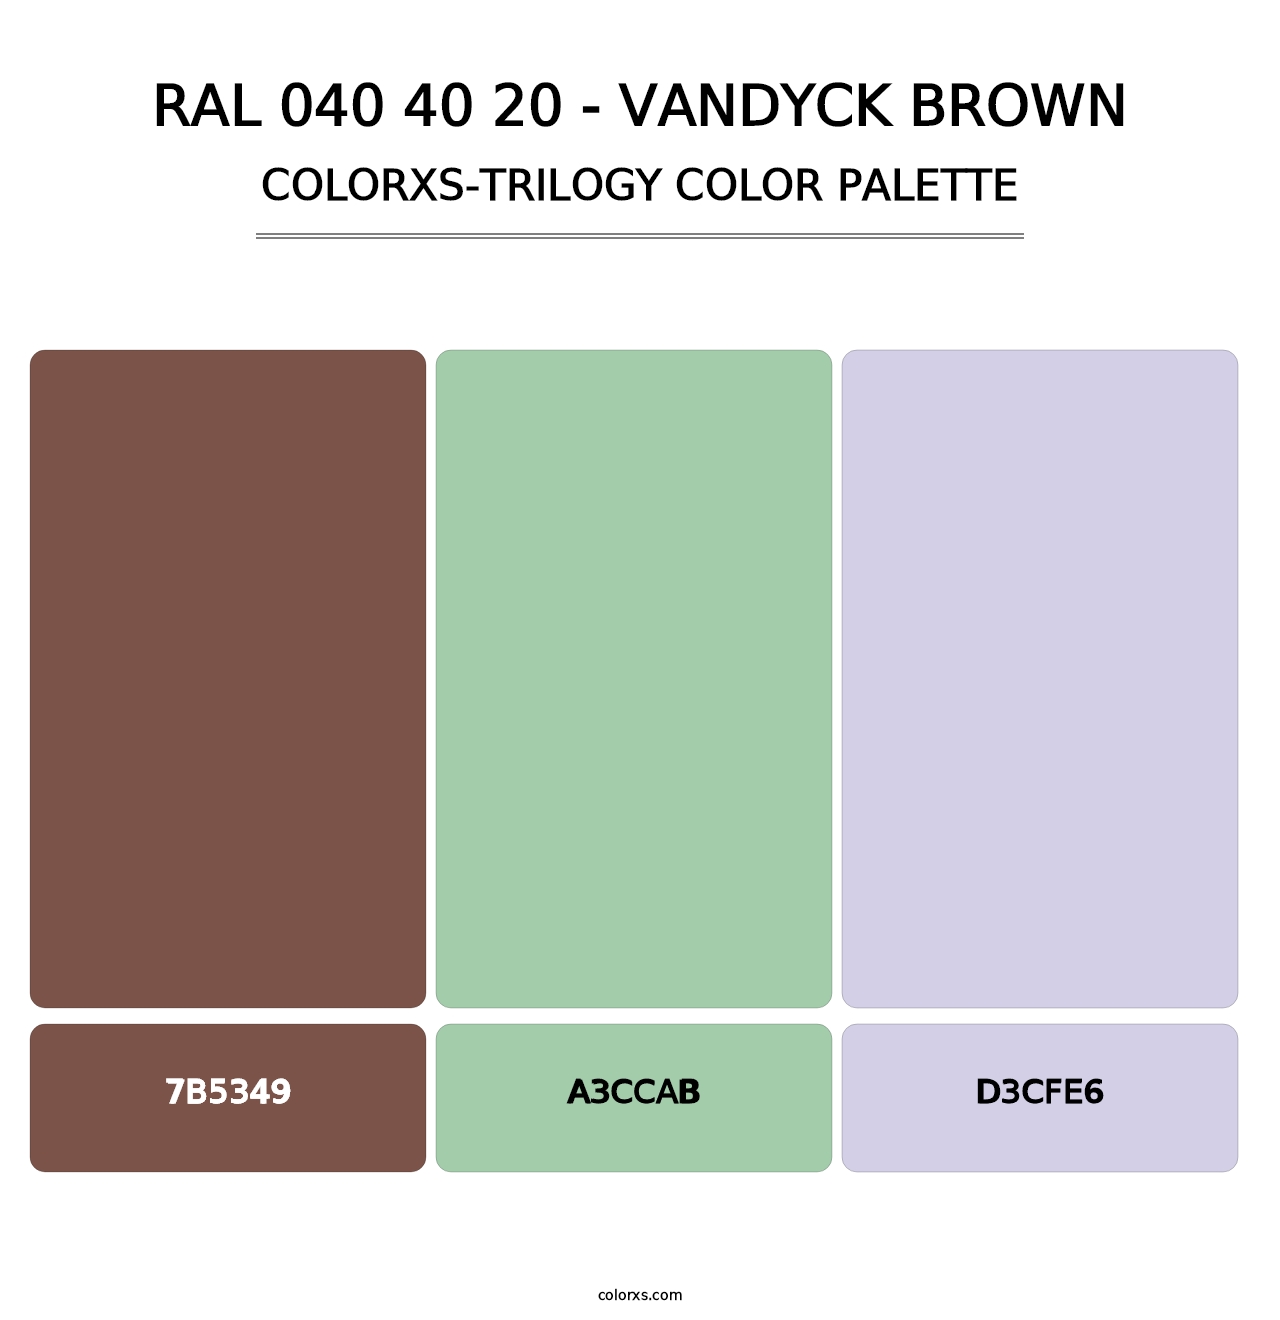 RAL 040 40 20 - Vandyck Brown - Colorxs Trilogy Palette